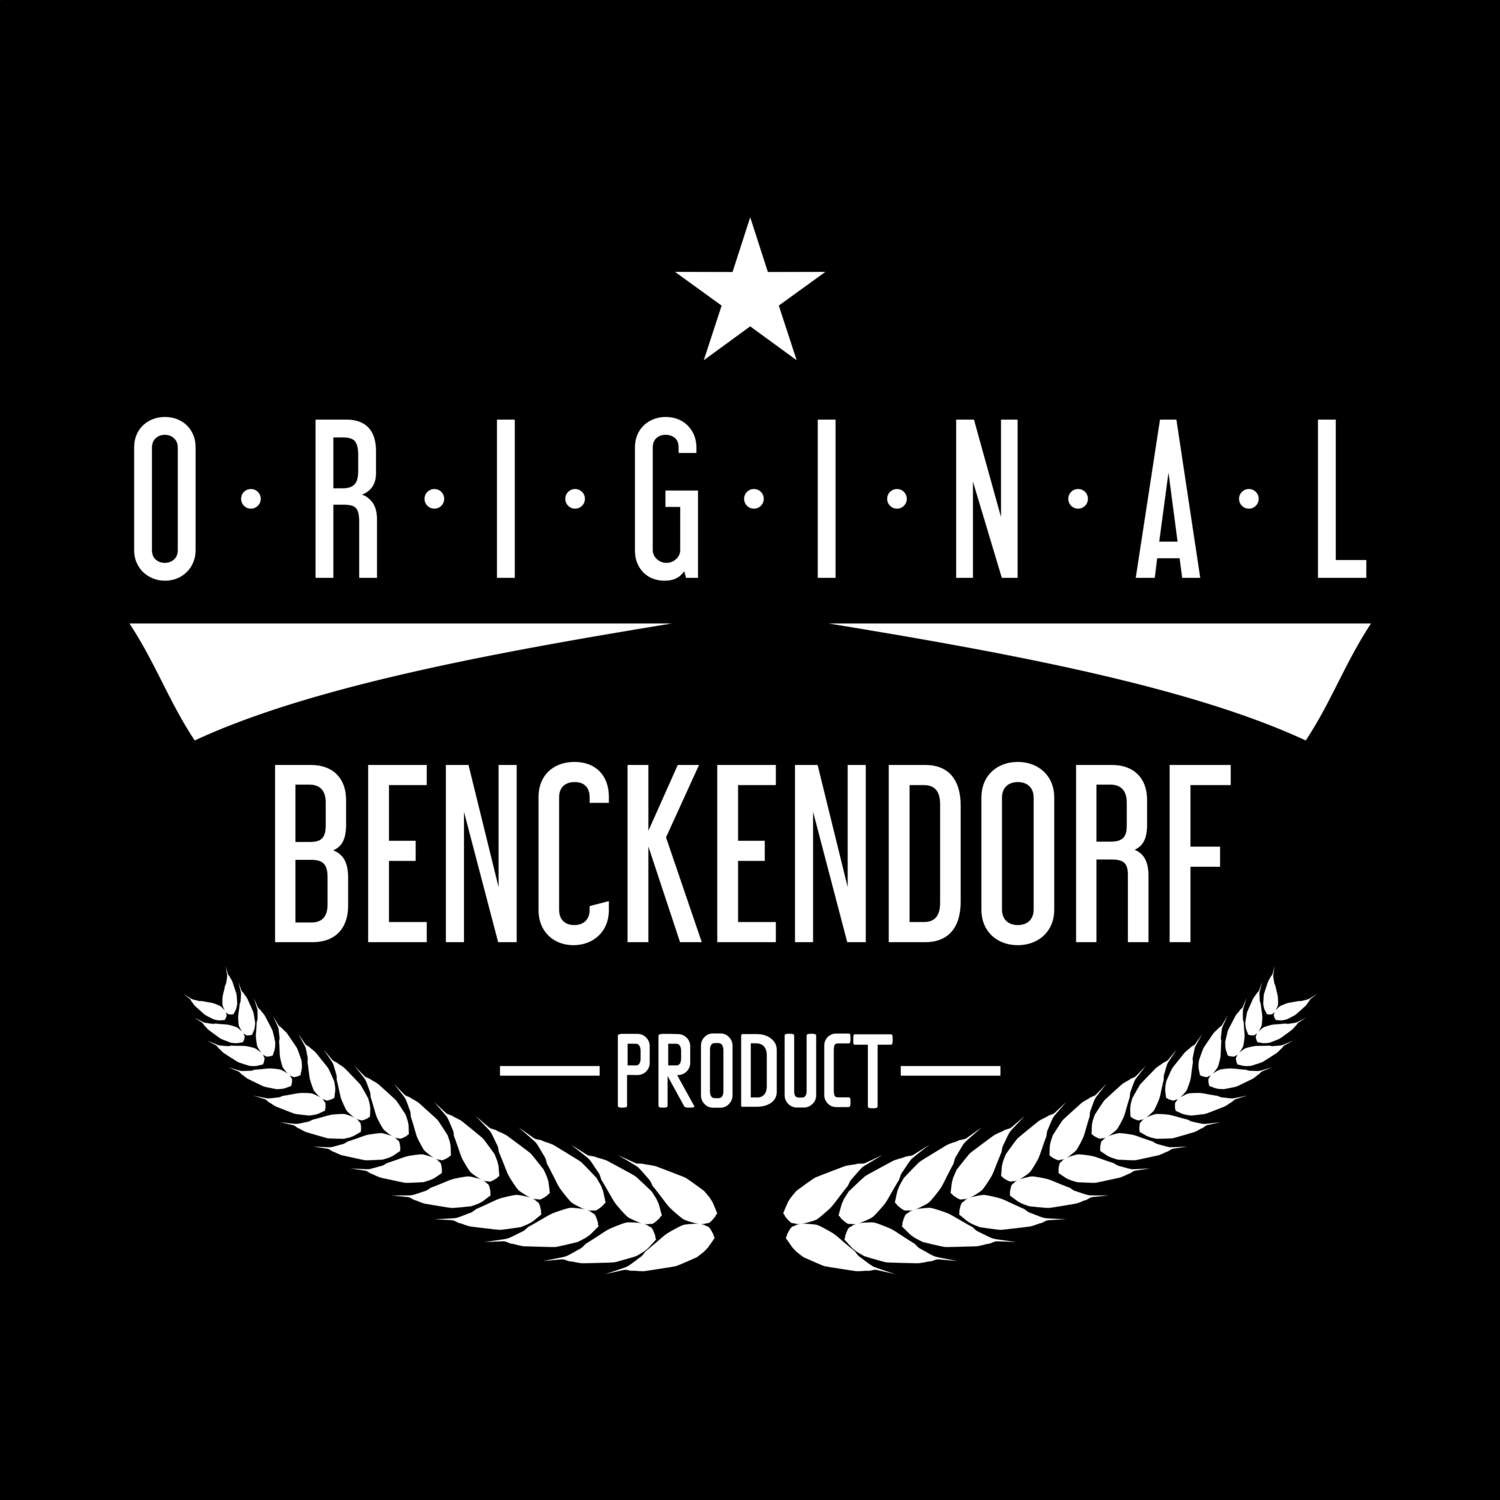 Benckendorf T-Shirt »Original Product«